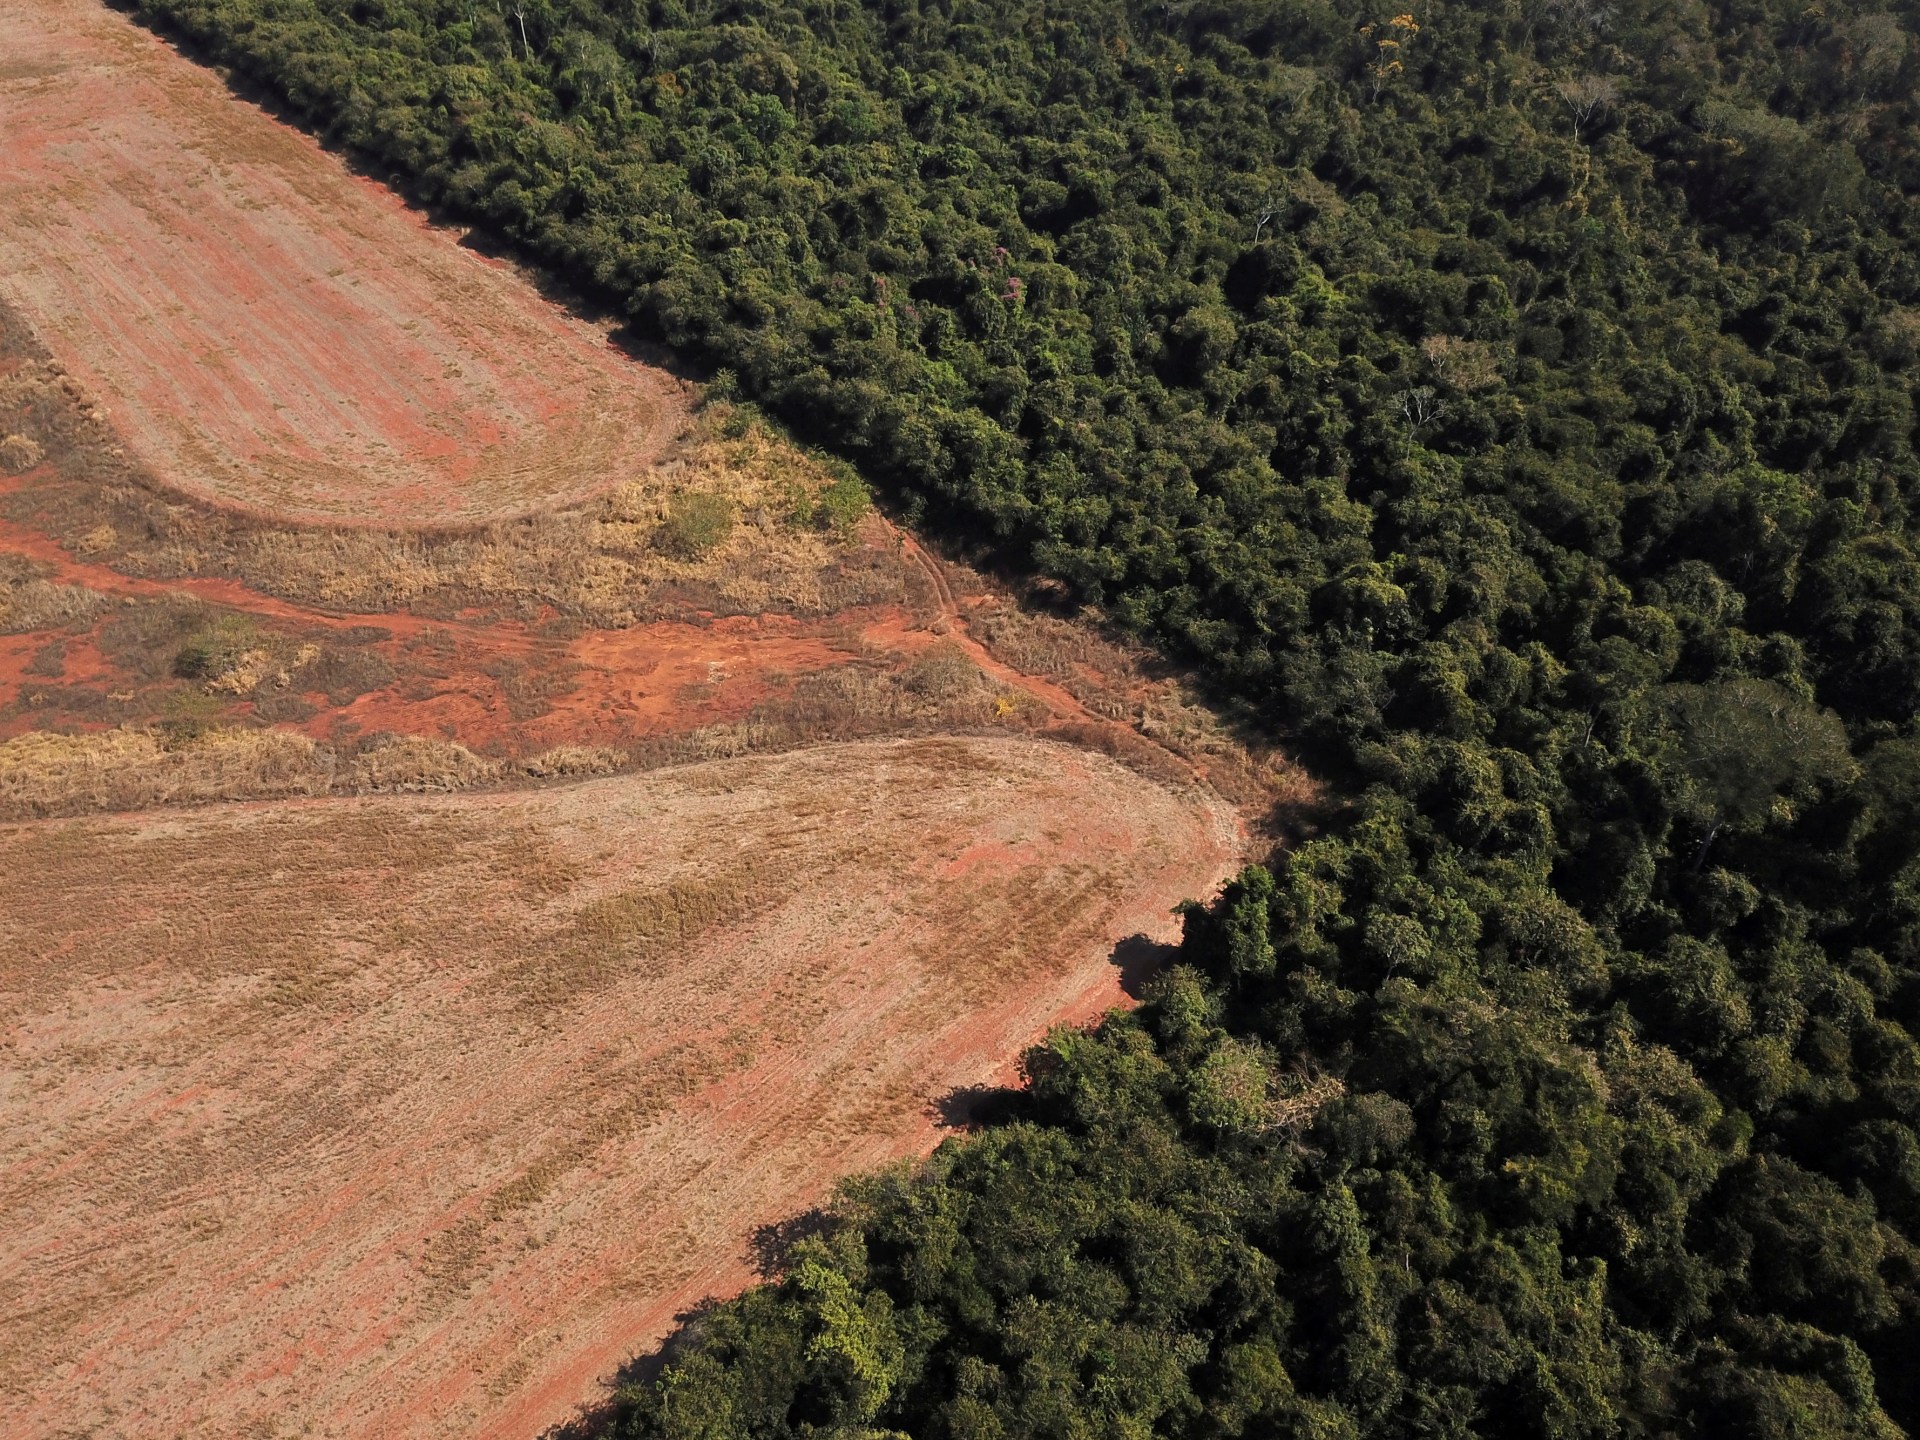 Germany pledges millions to help Brazil protect Amazon rainforest